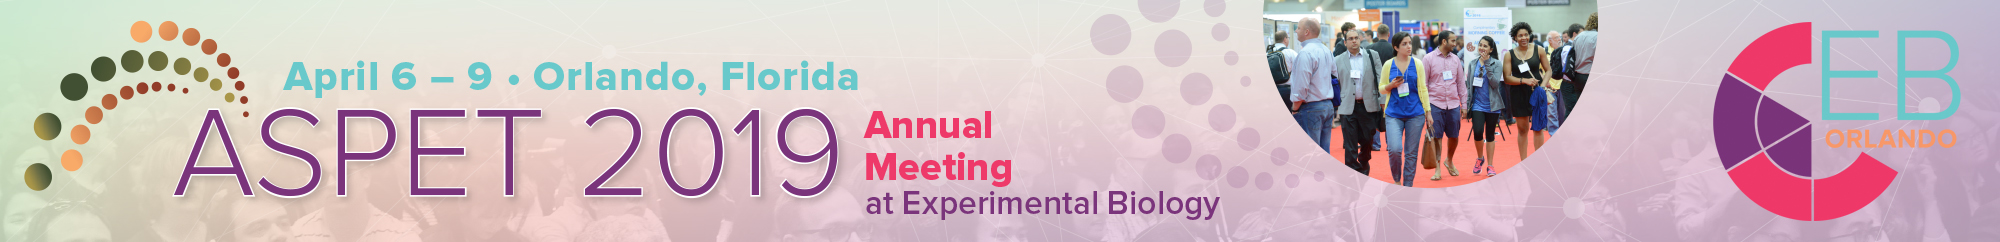 ASPET 2019 Annual Meeting